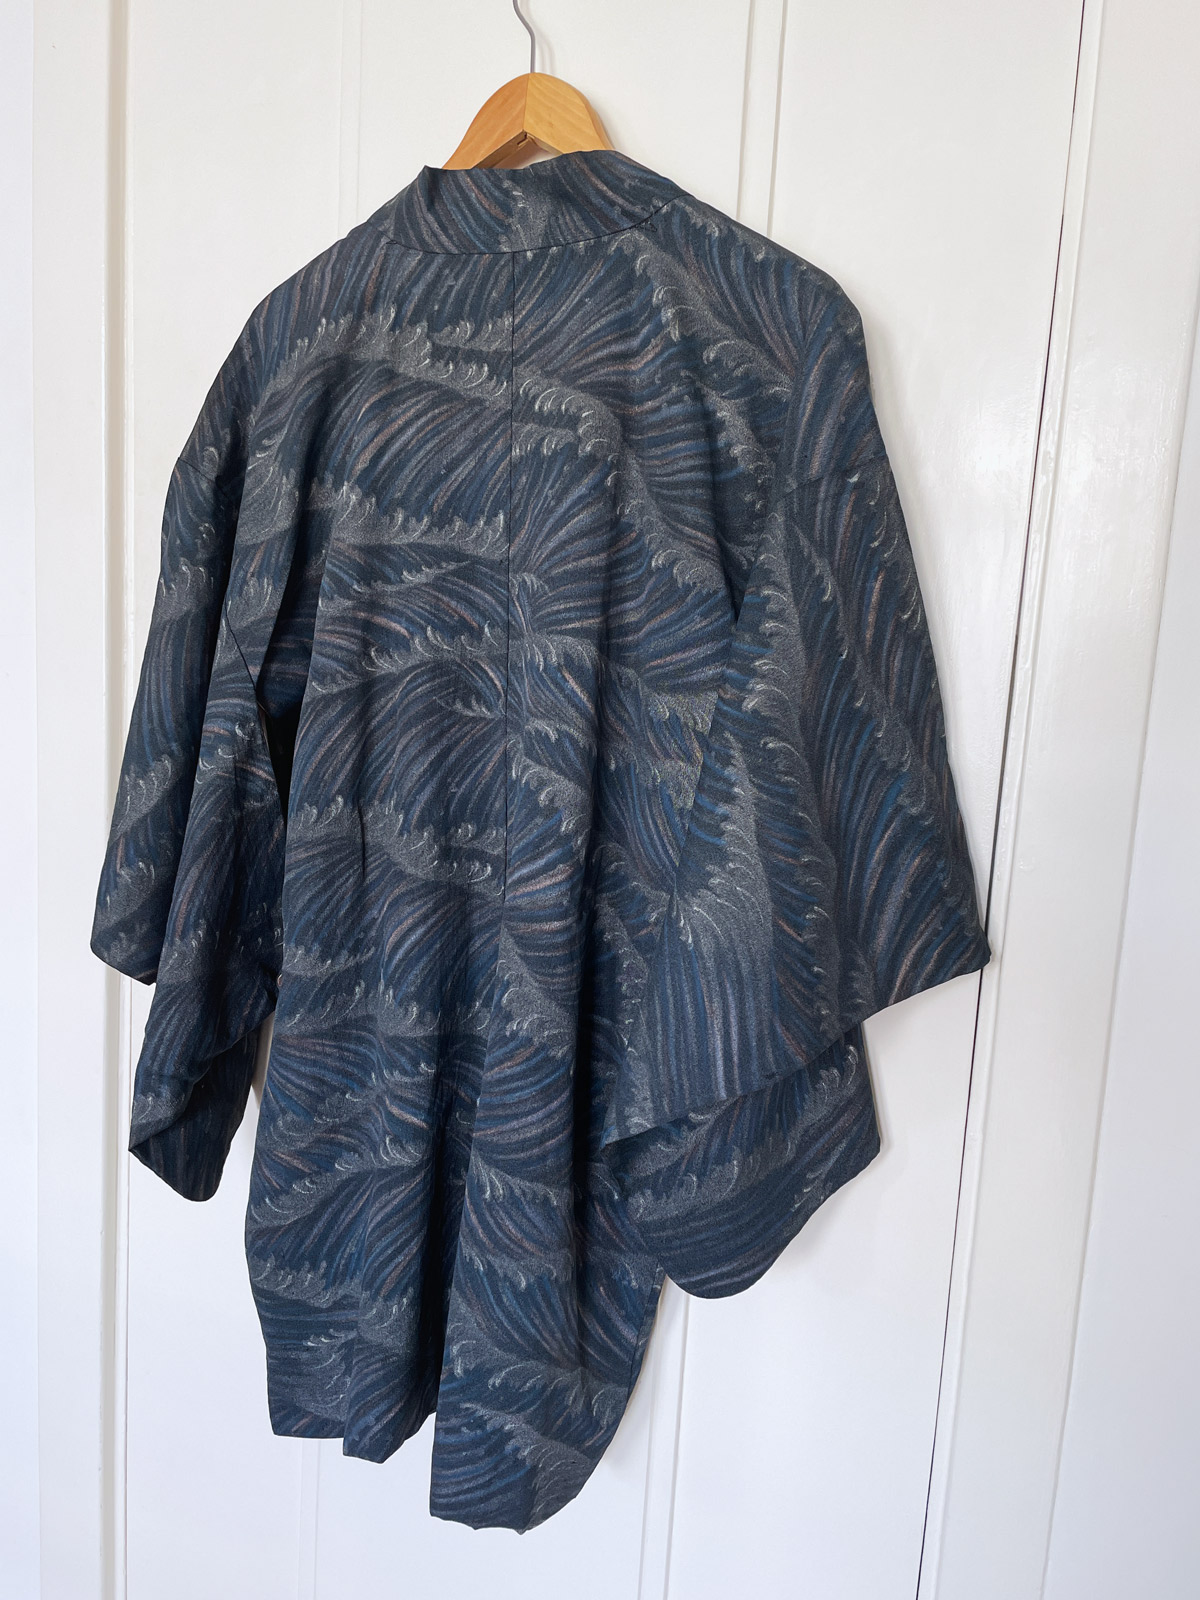 Nagisa – Kimono jacket with blue gray waves design